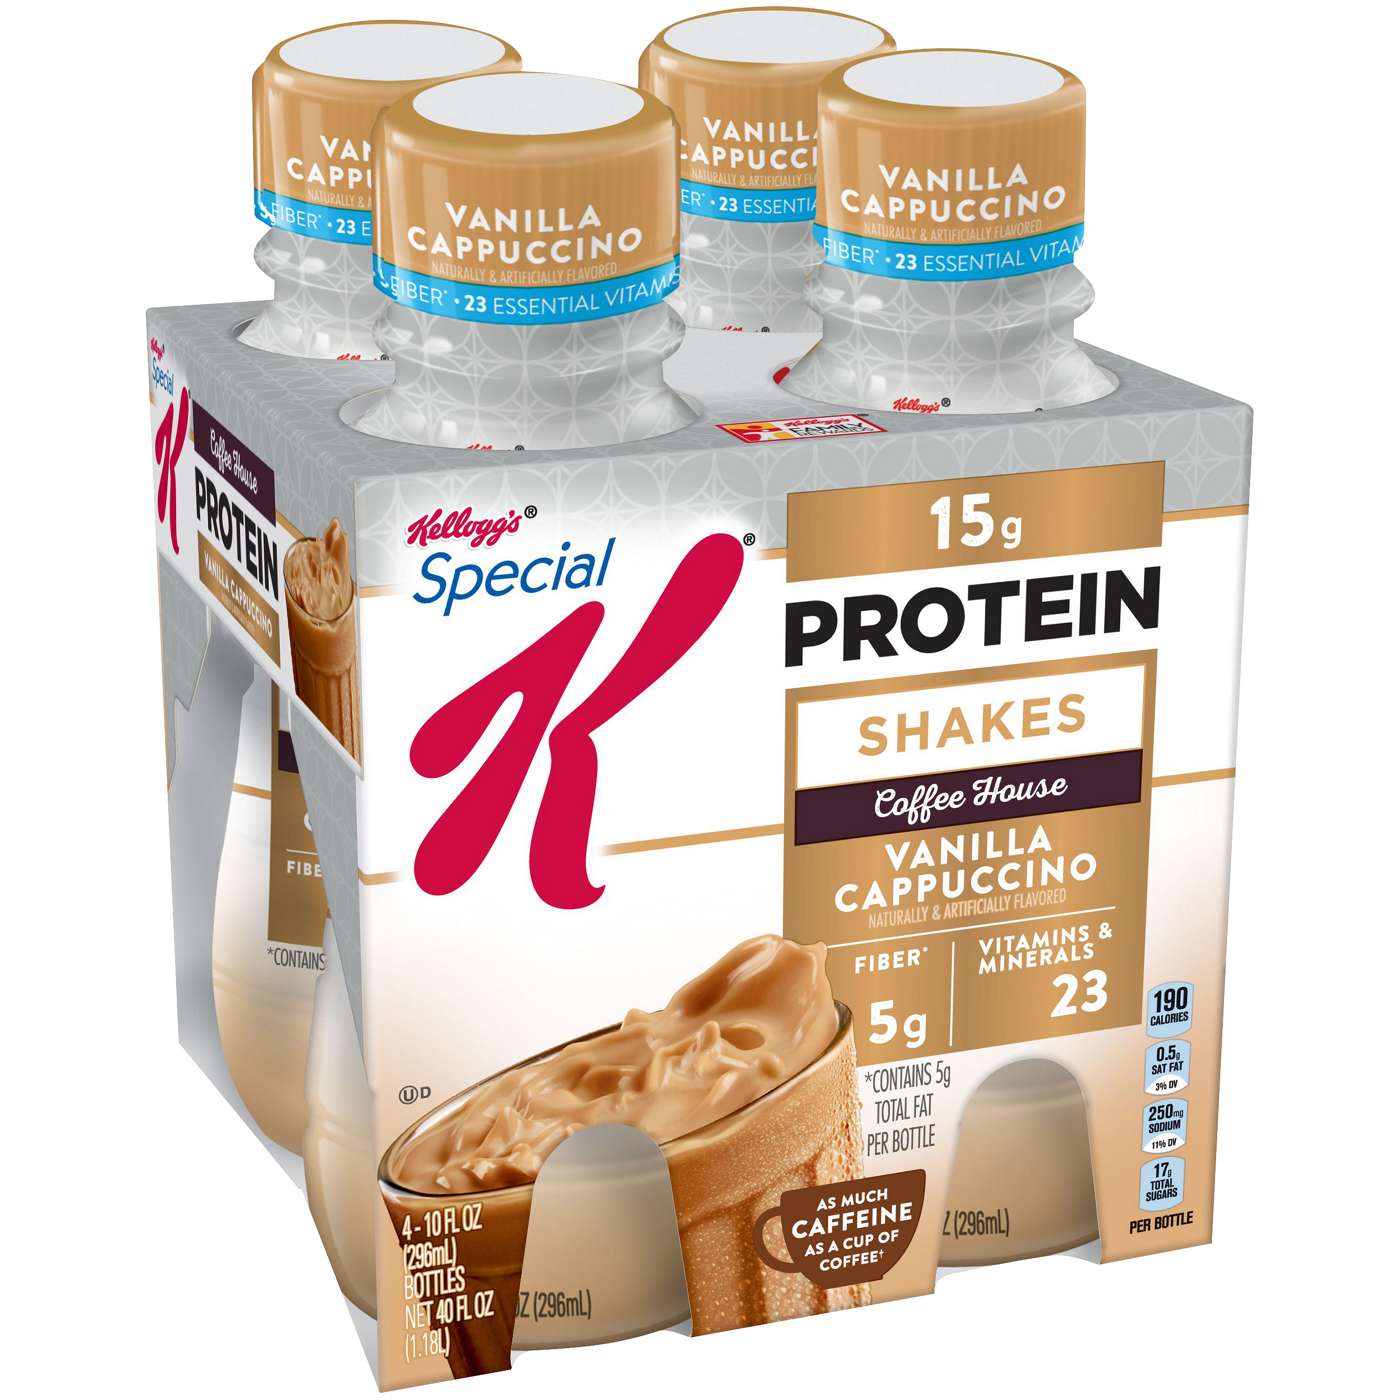 Kellogg's Special K Protein Shakes Vanilla Cappuccino; image 3 of 4